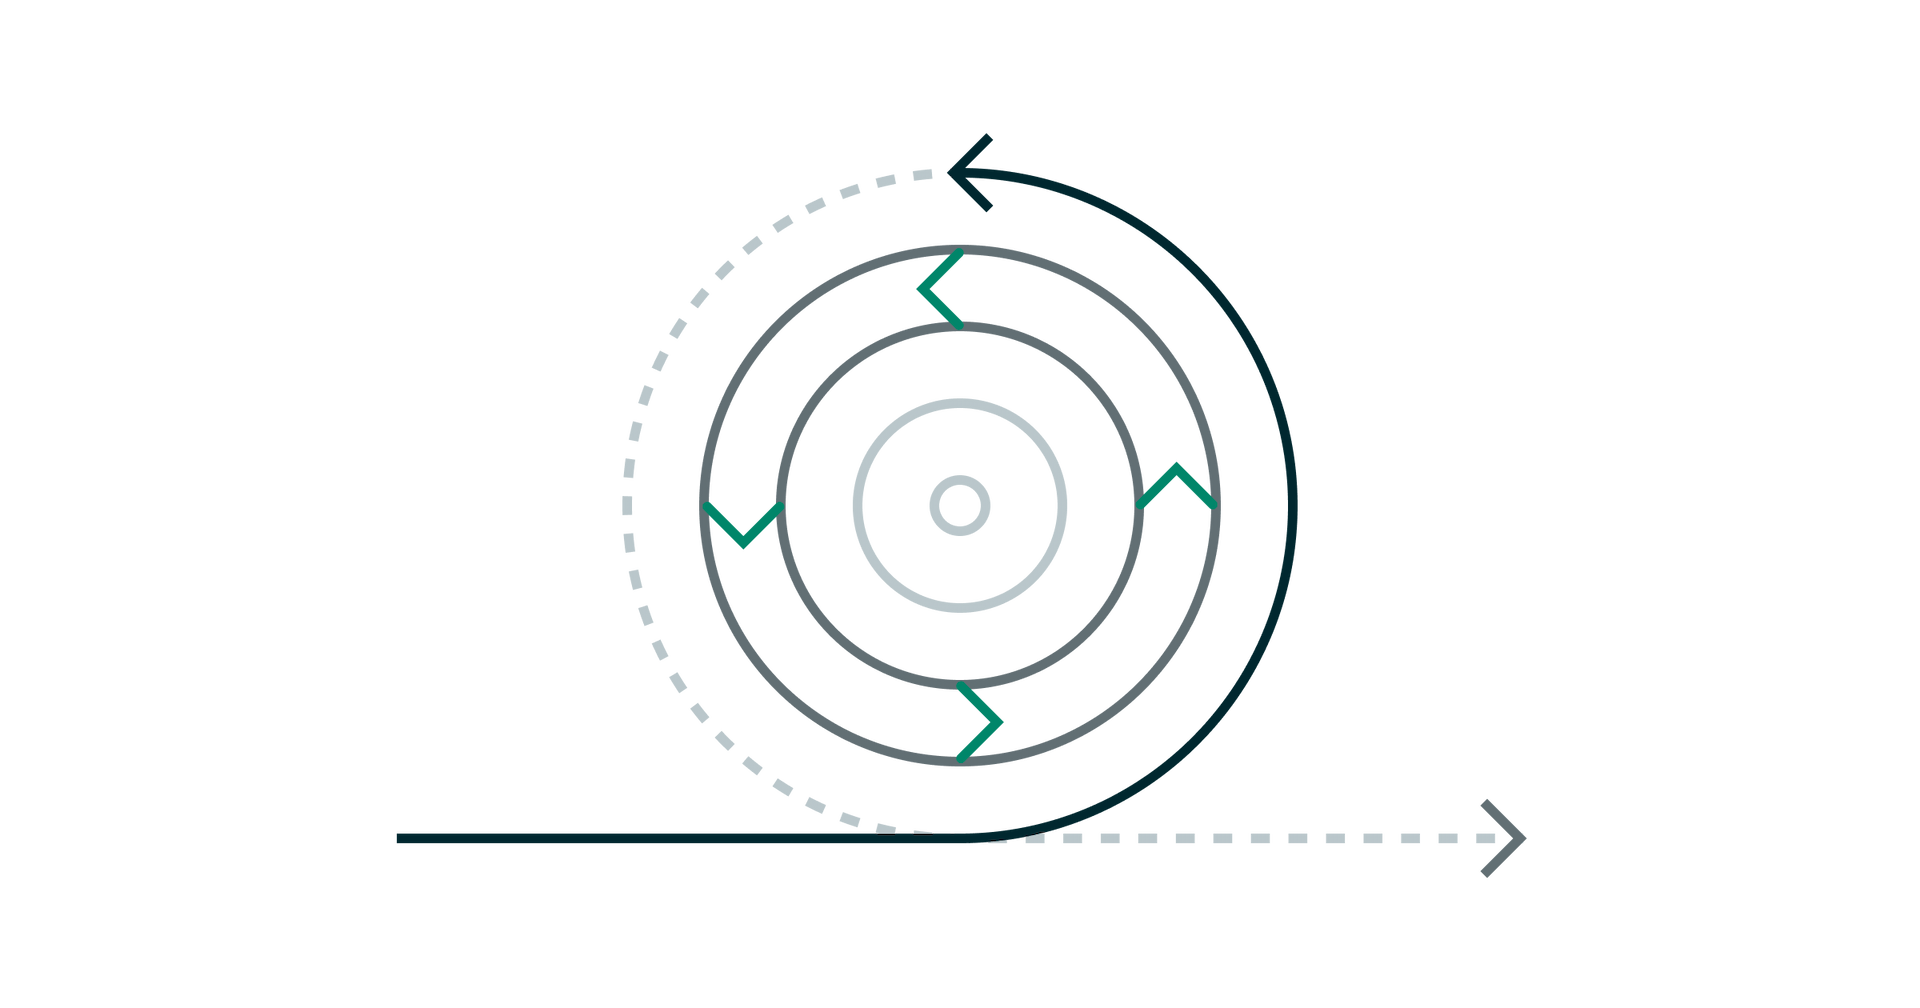 Bullseye outline, with arrows inside the bullseye margins, and an outside circular line with an arrow, to convey agile meaning